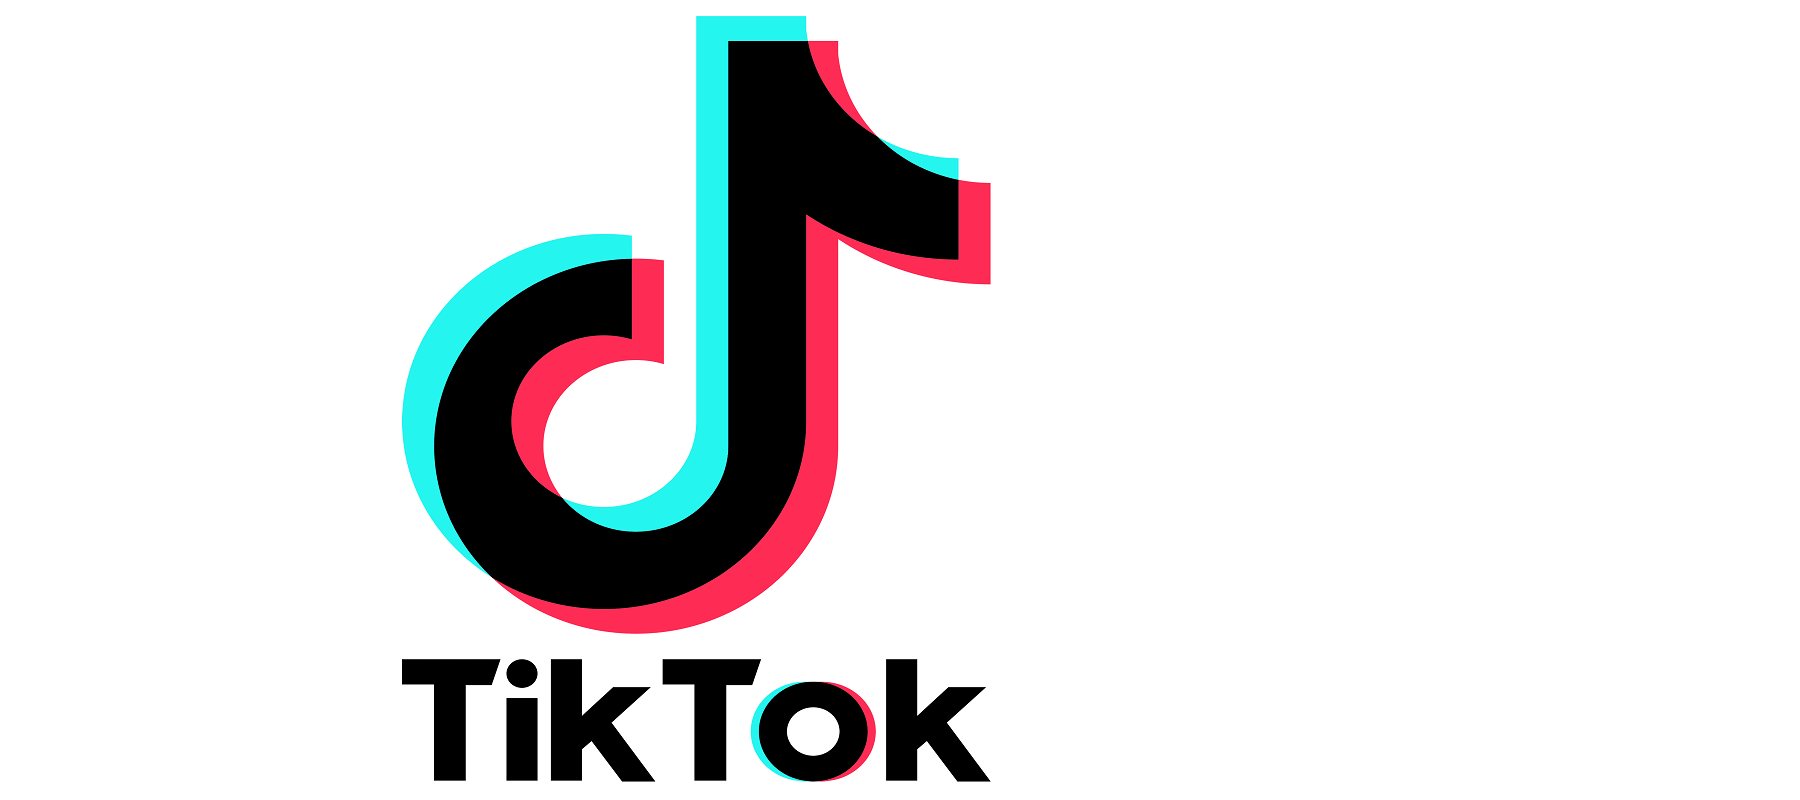 Kenya leads the world in global TikTok usage, report